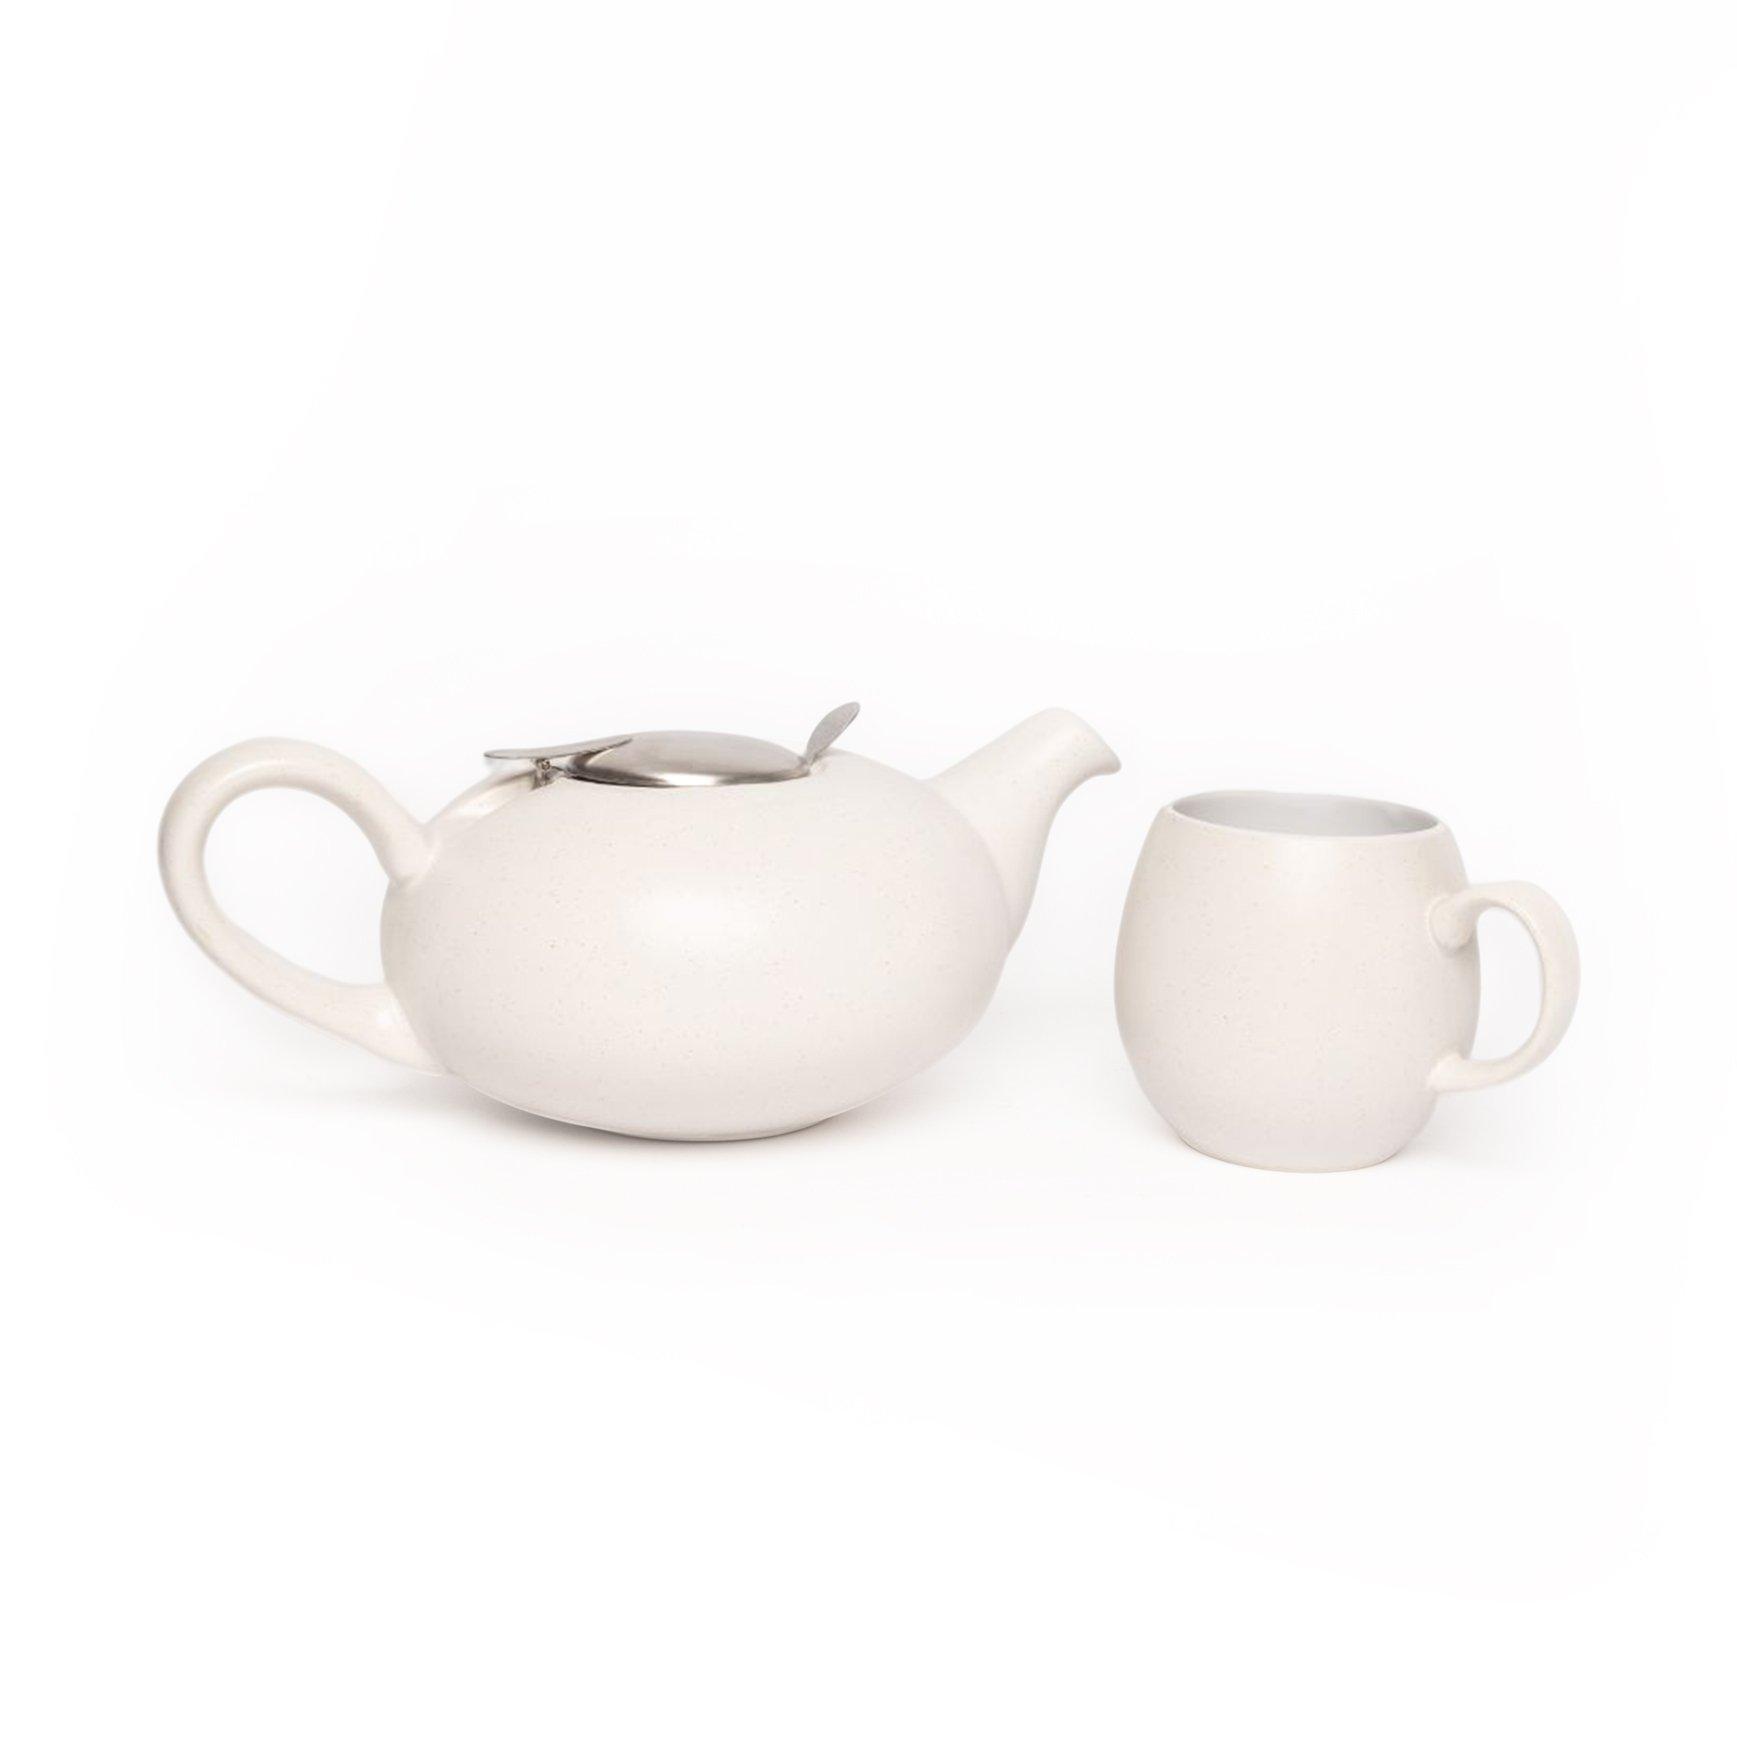 Pebble(r) 4 Cup Filter Teapot and 4x Pebble(r) Mugs Set